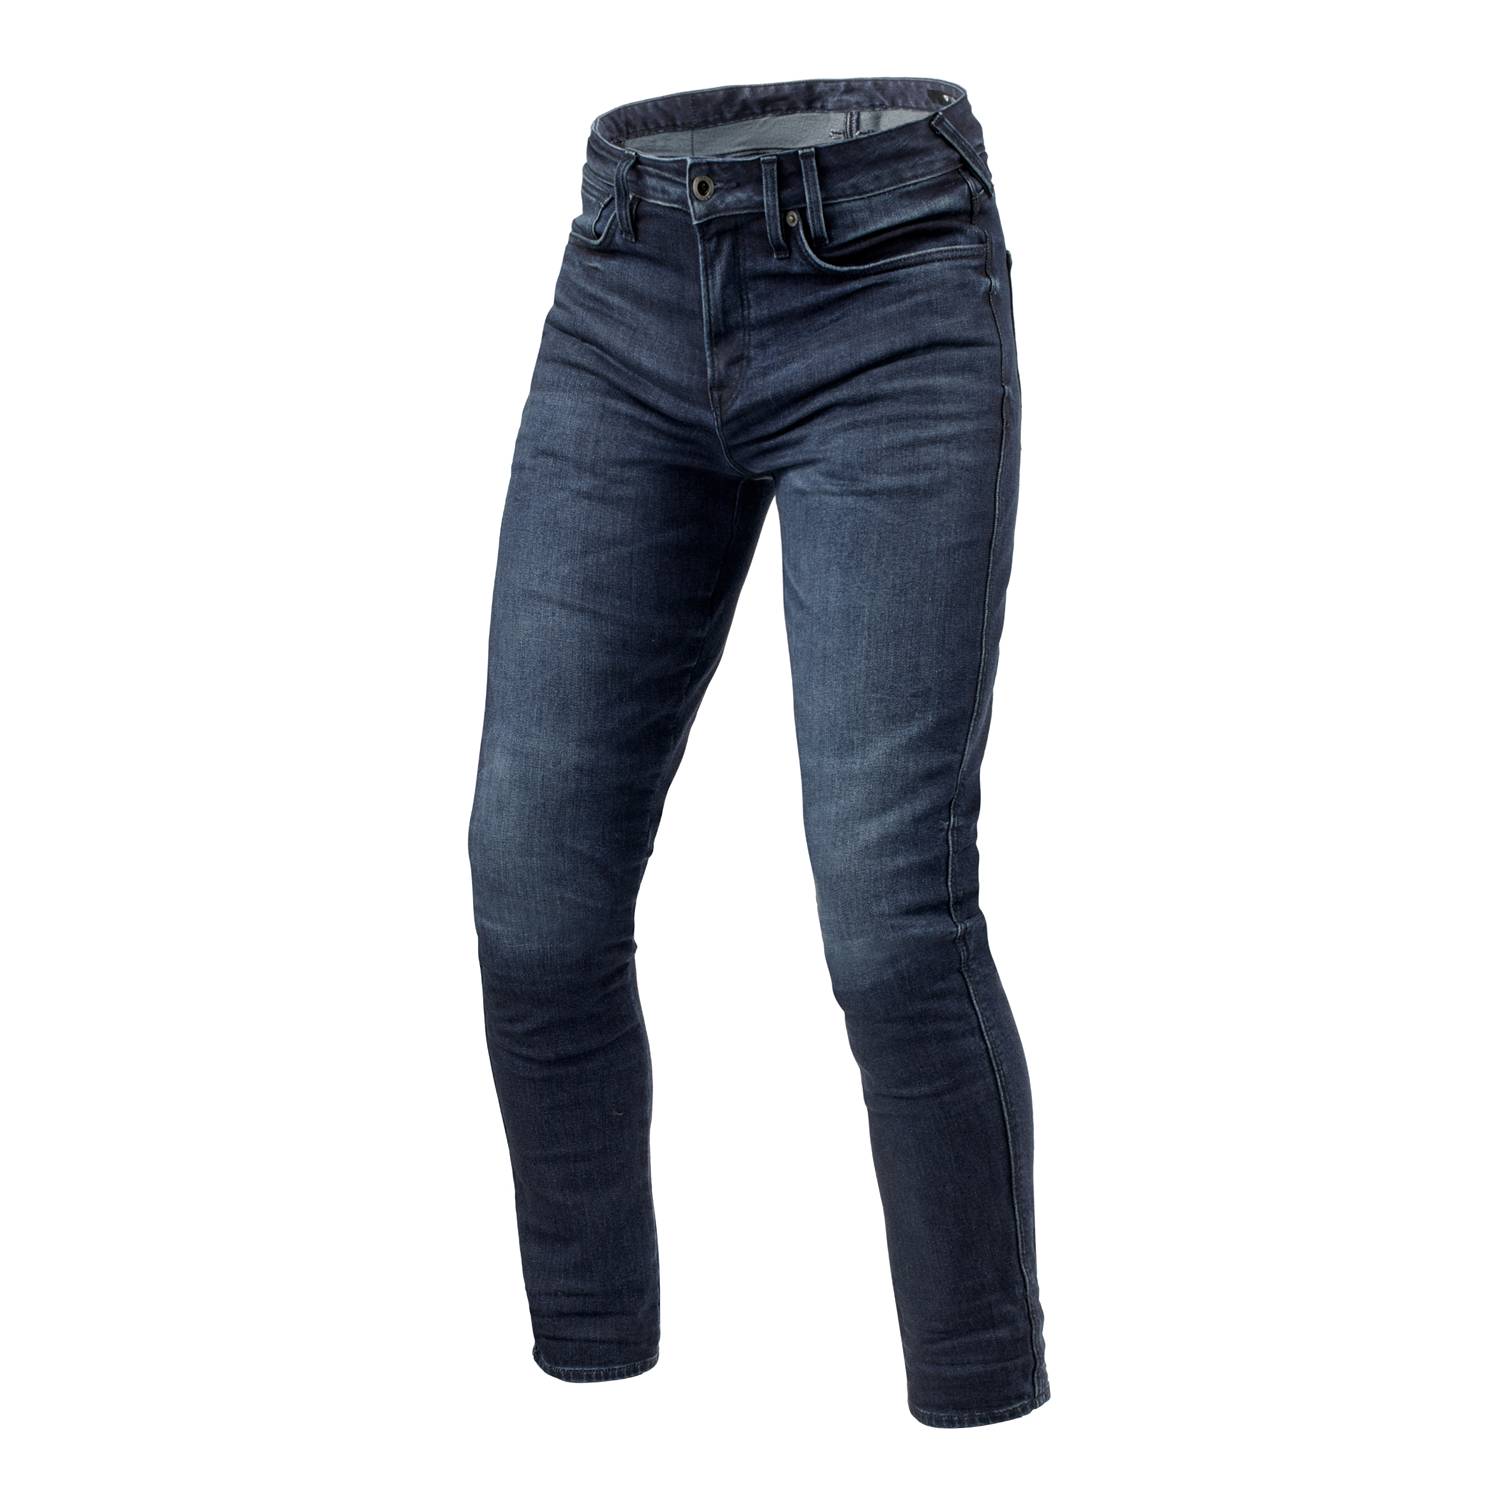 Image of REV'IT! Jeans Carlin SK Dark Blue Used L34 Motorcycle Jeans Talla L34/W31